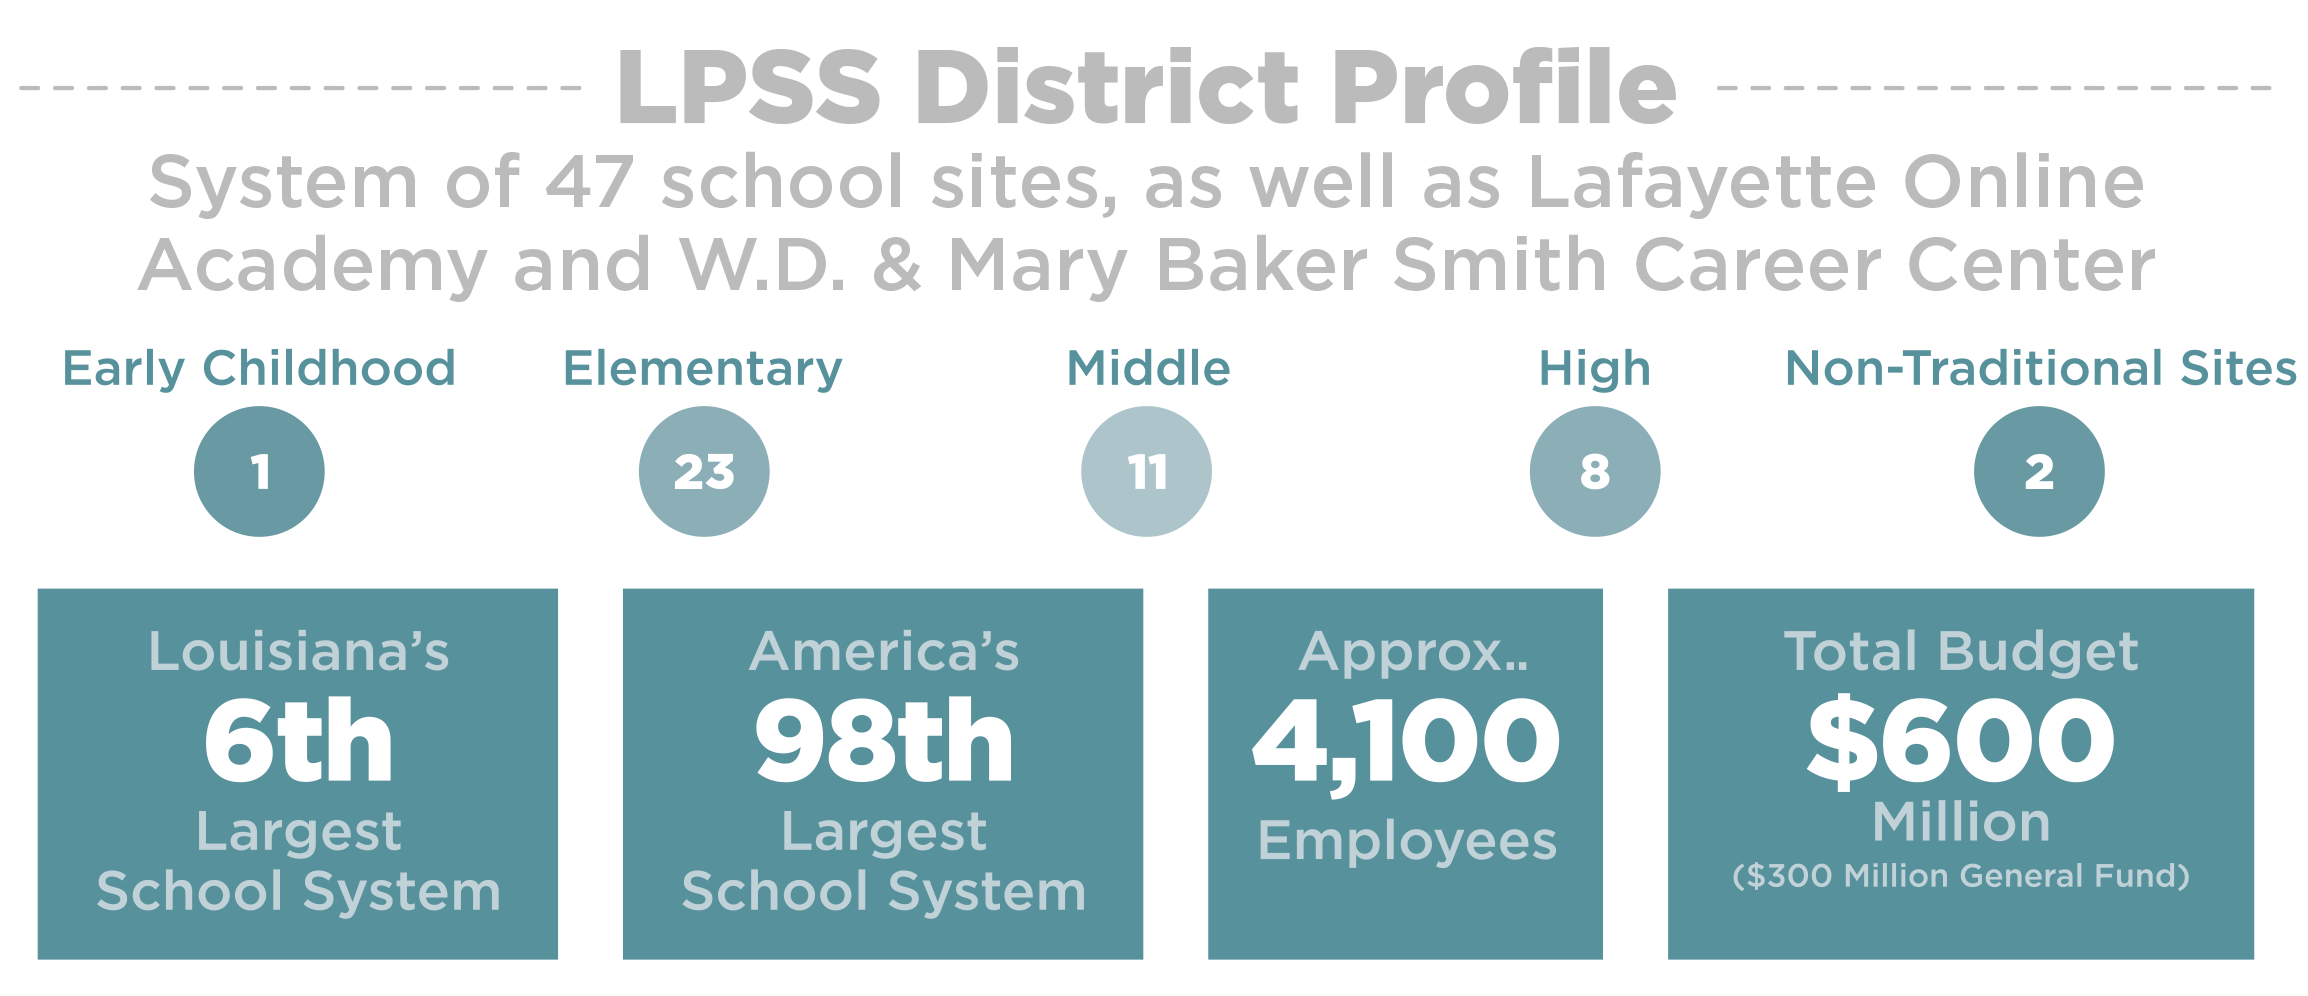 LPSS Information Profile